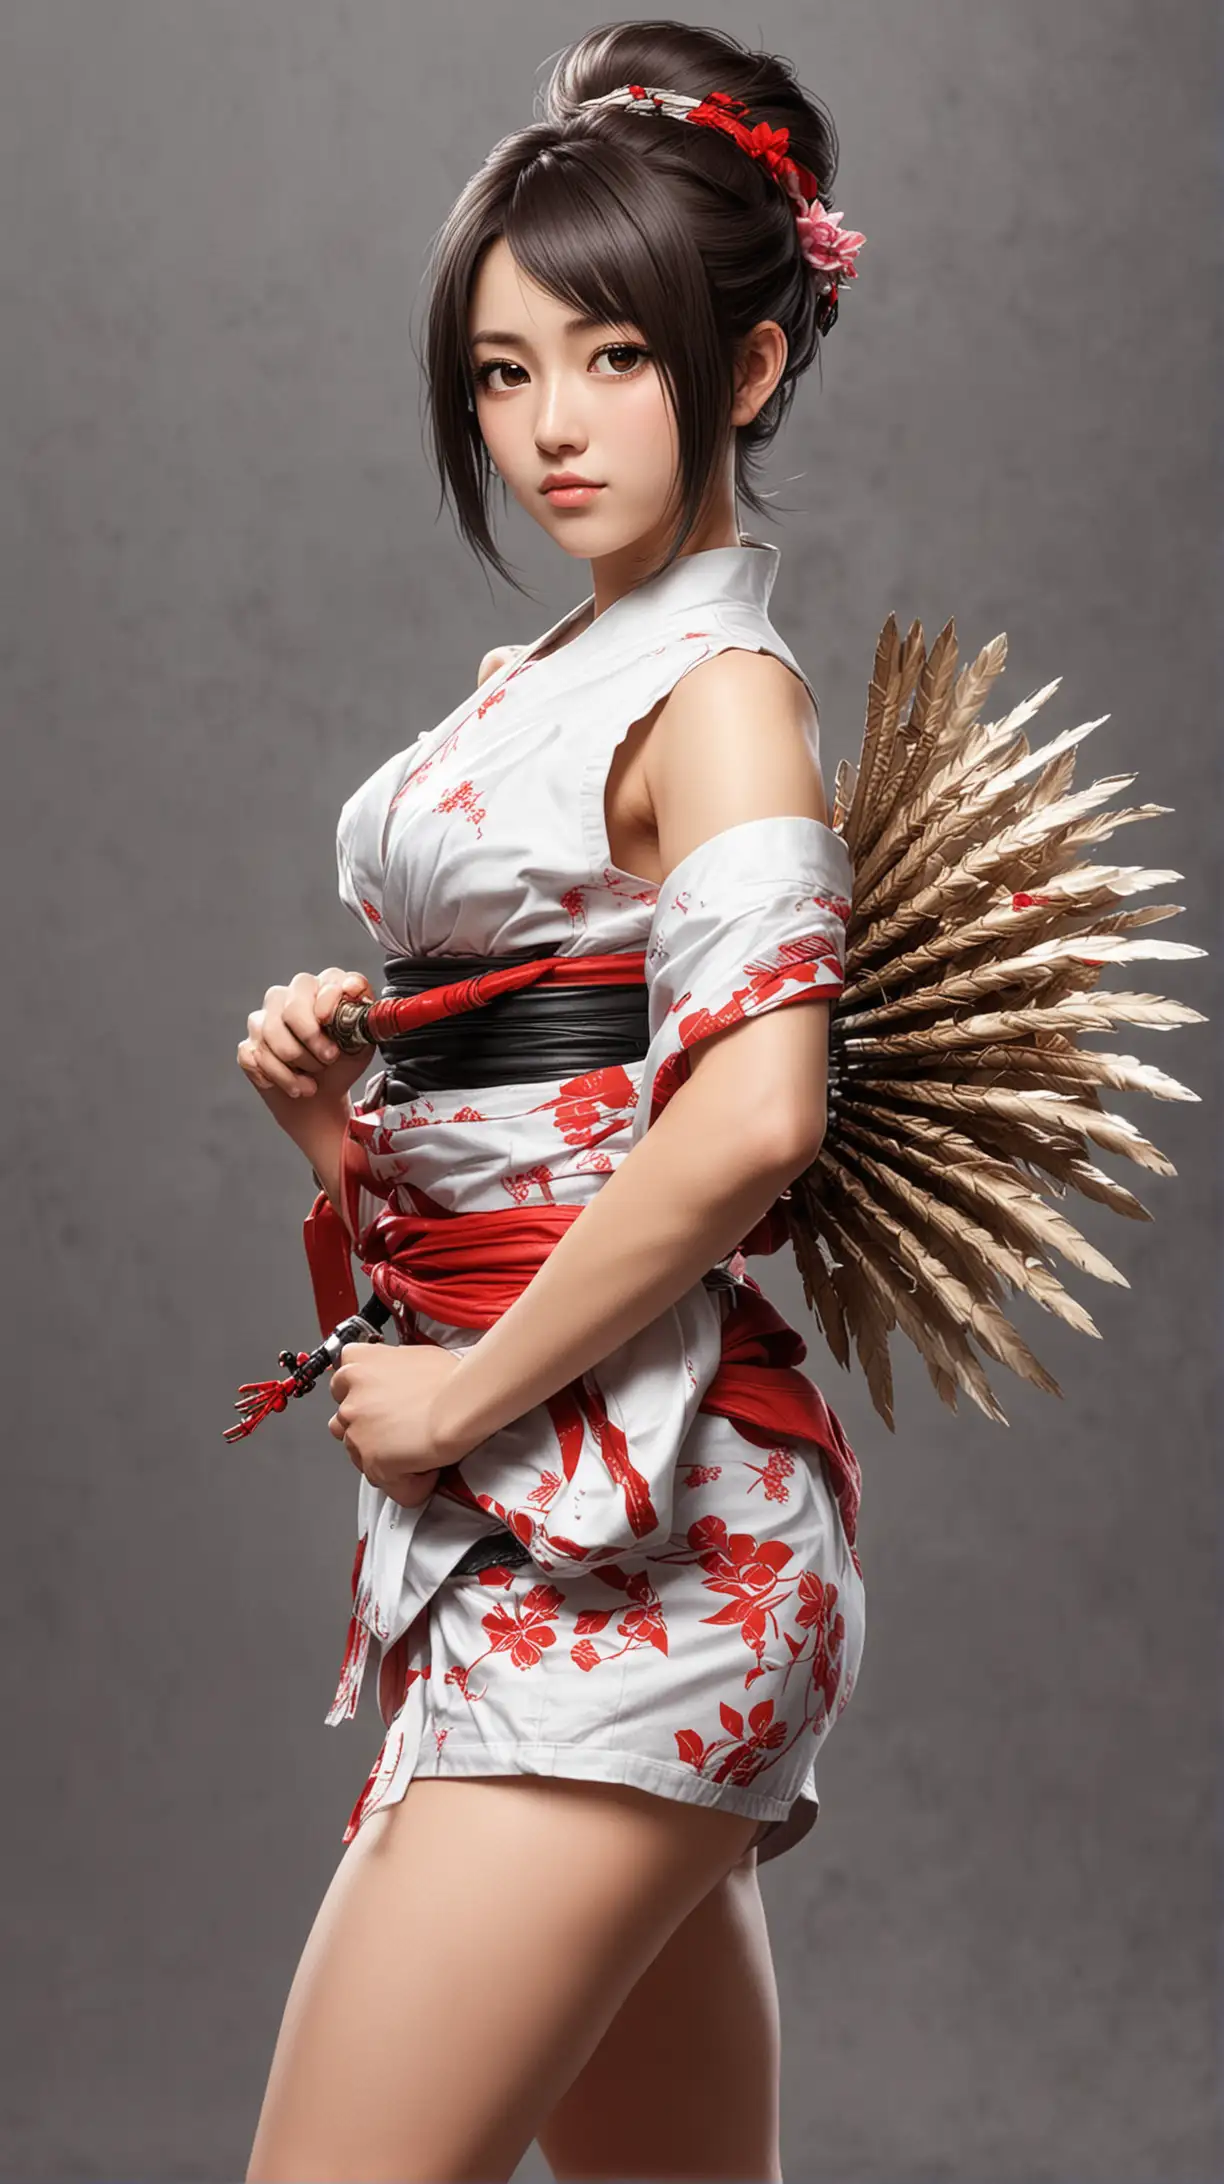 The King of Fighter
Shiranui Mai
Japannese
Female
Ninja
Carrying a fan